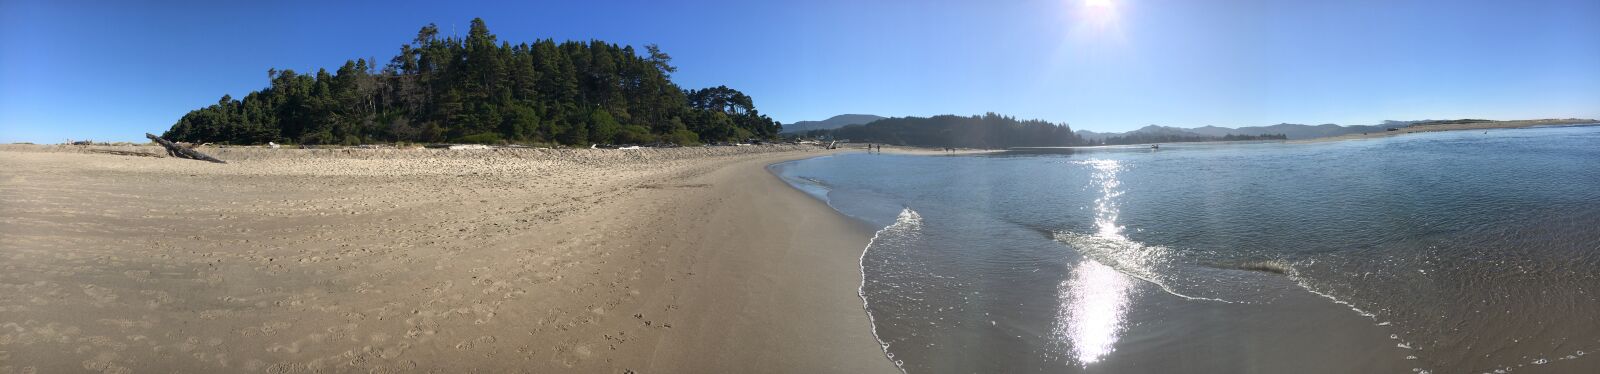 Apple iPhone 6s sample photo. Beach, landscape, still water photography